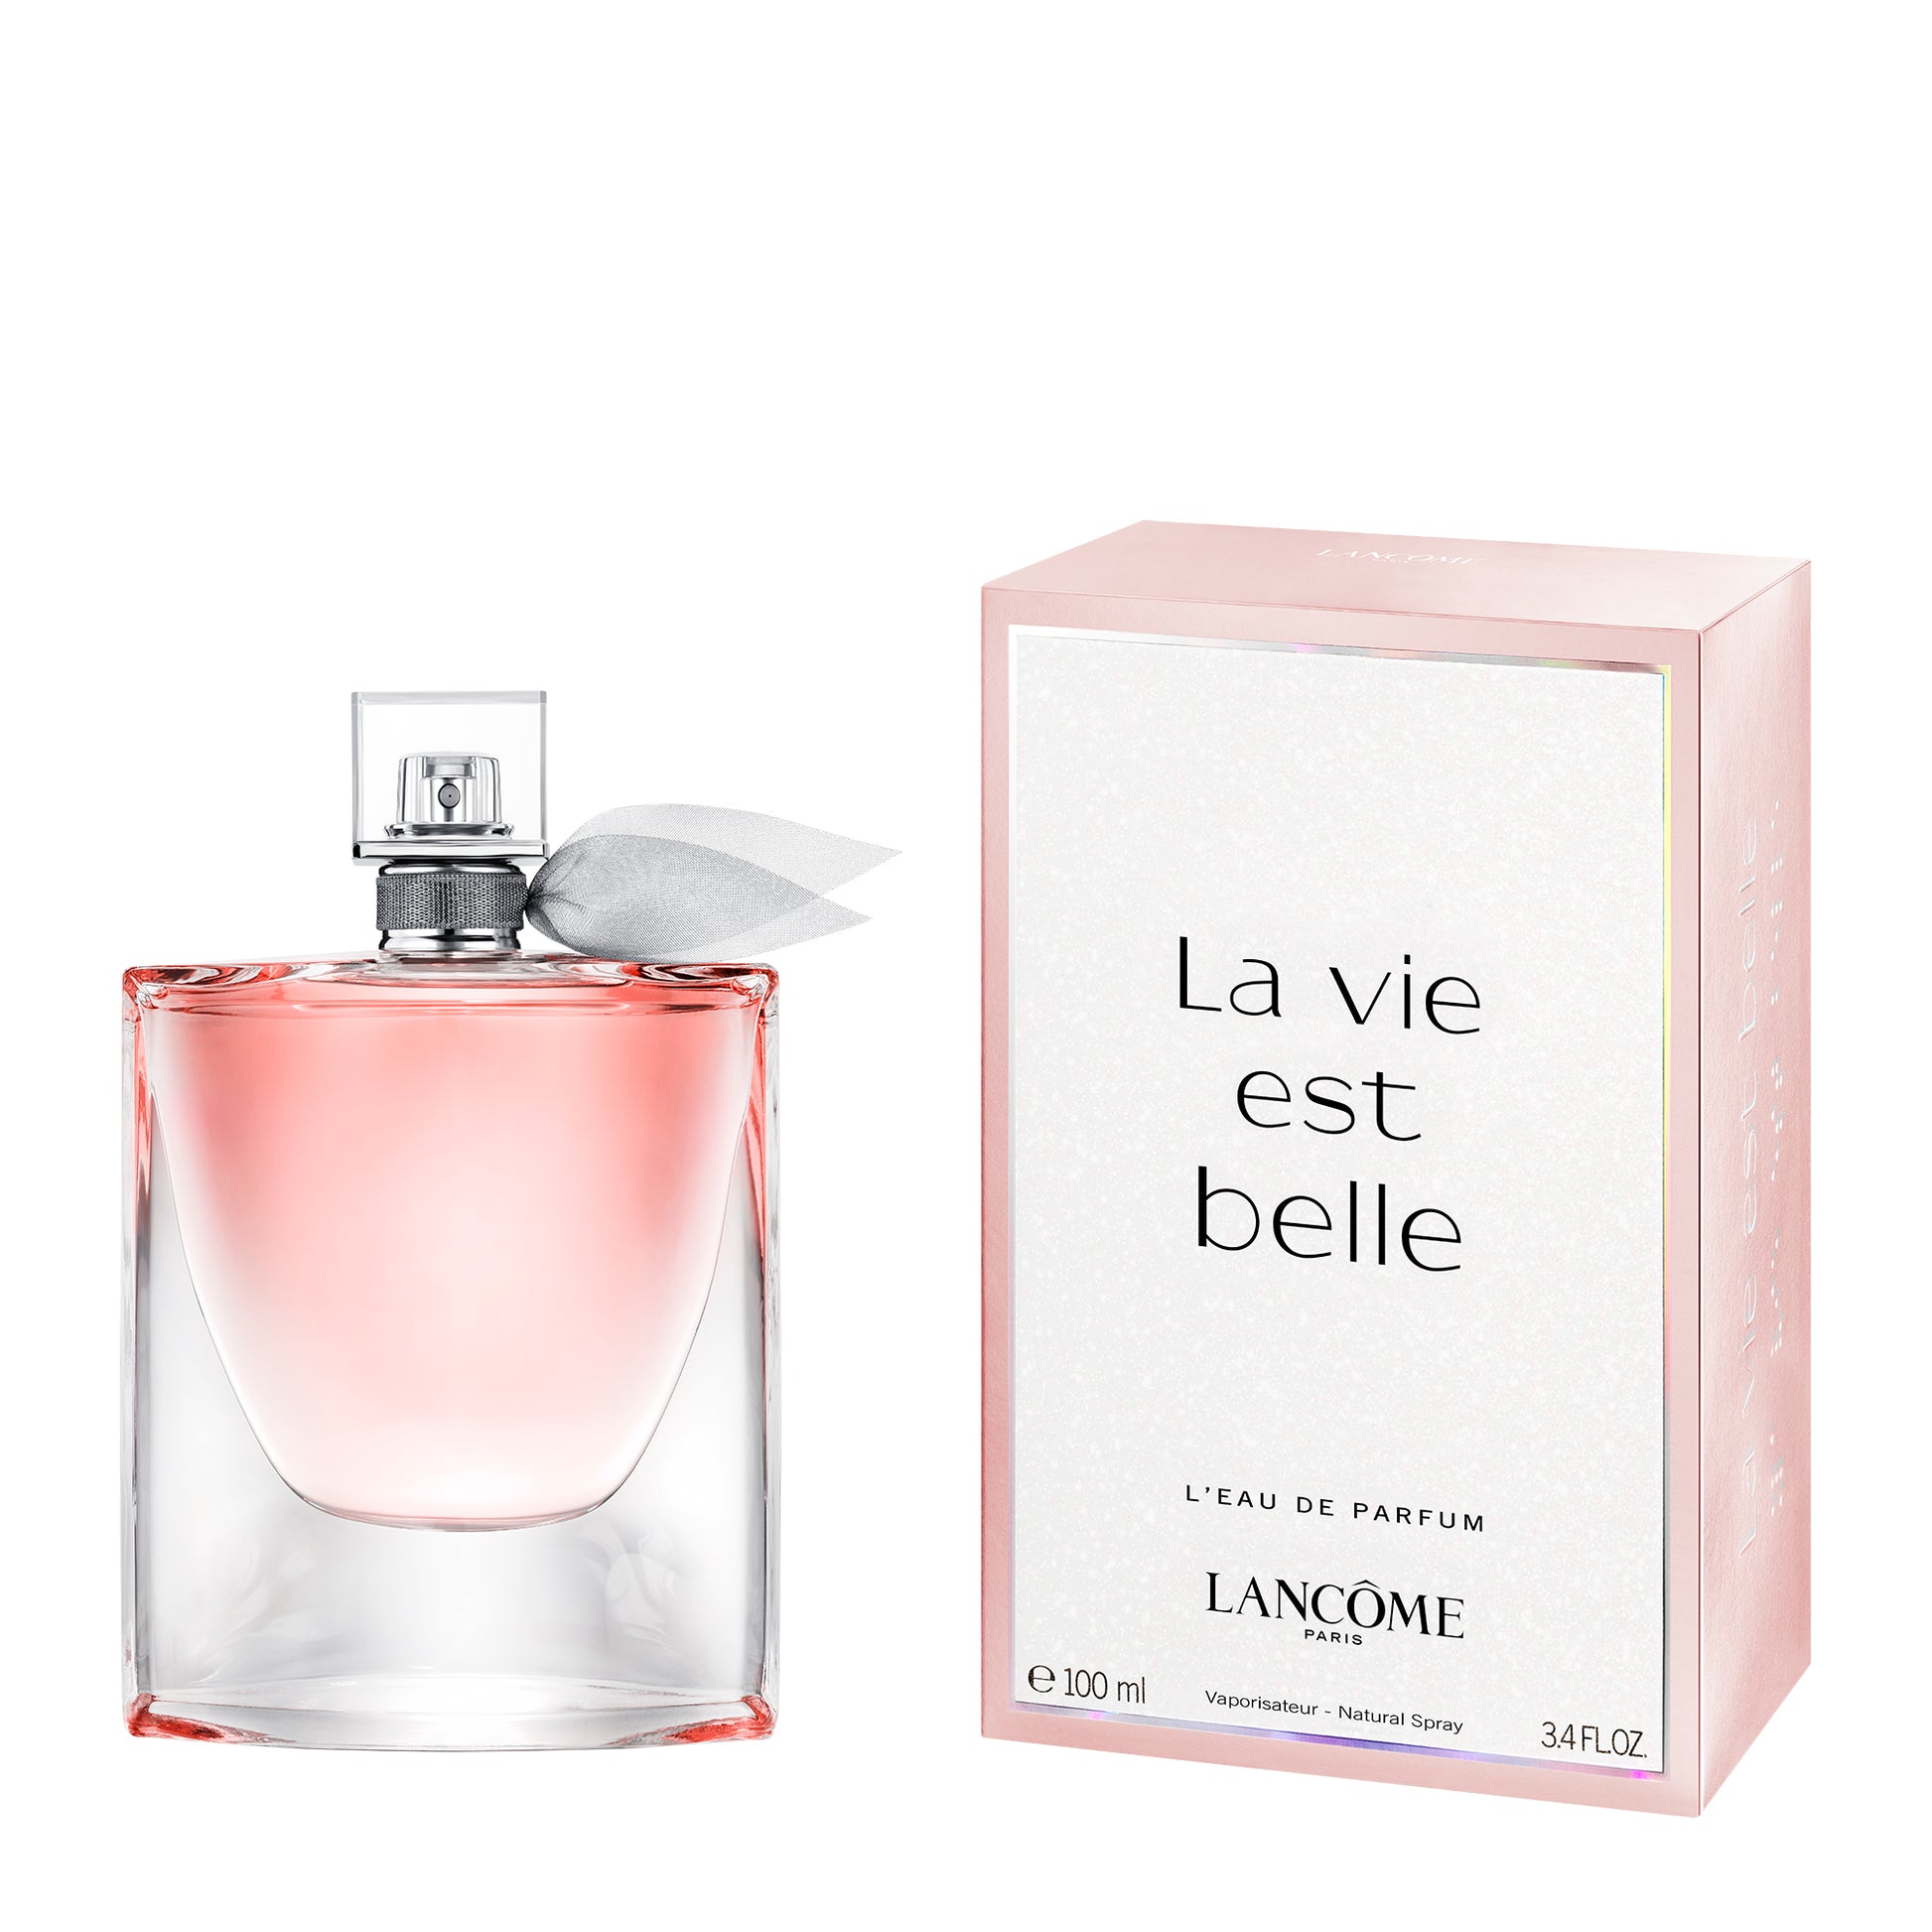 La Vie est Belle, Eau de Parfum: prezzo, offerte, formati